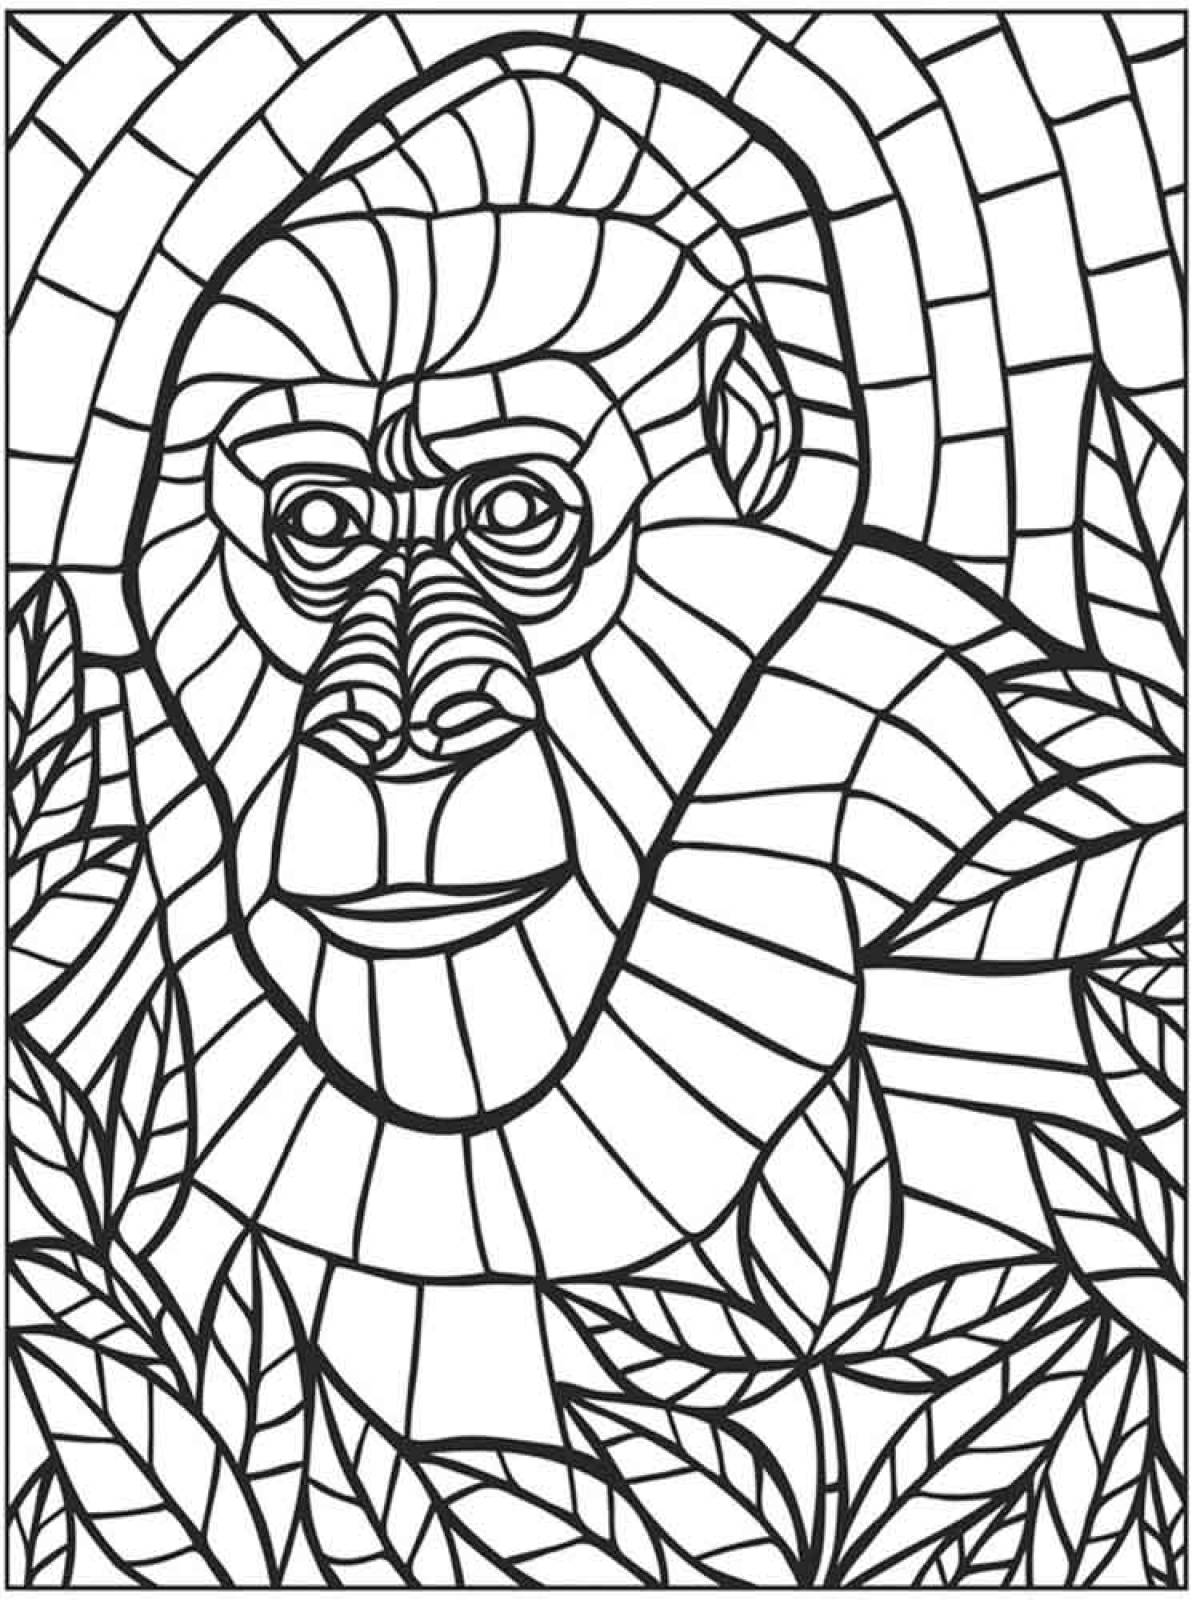 Mosaic gorilla